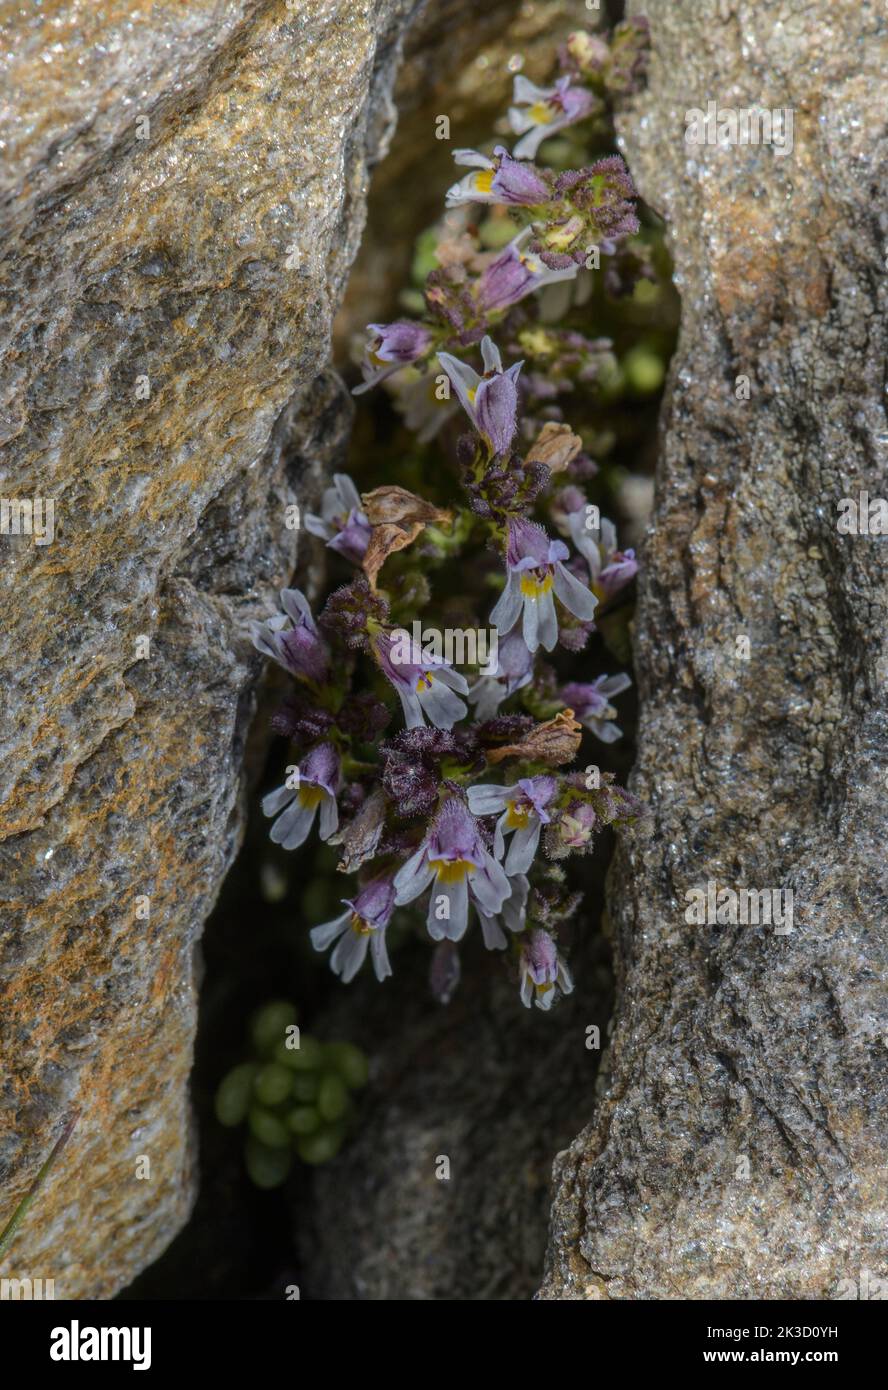 Dwarf Eyebright, Euphrasia minima in flower in crevice in acid schist rock, Italian Alps. Stock Photo